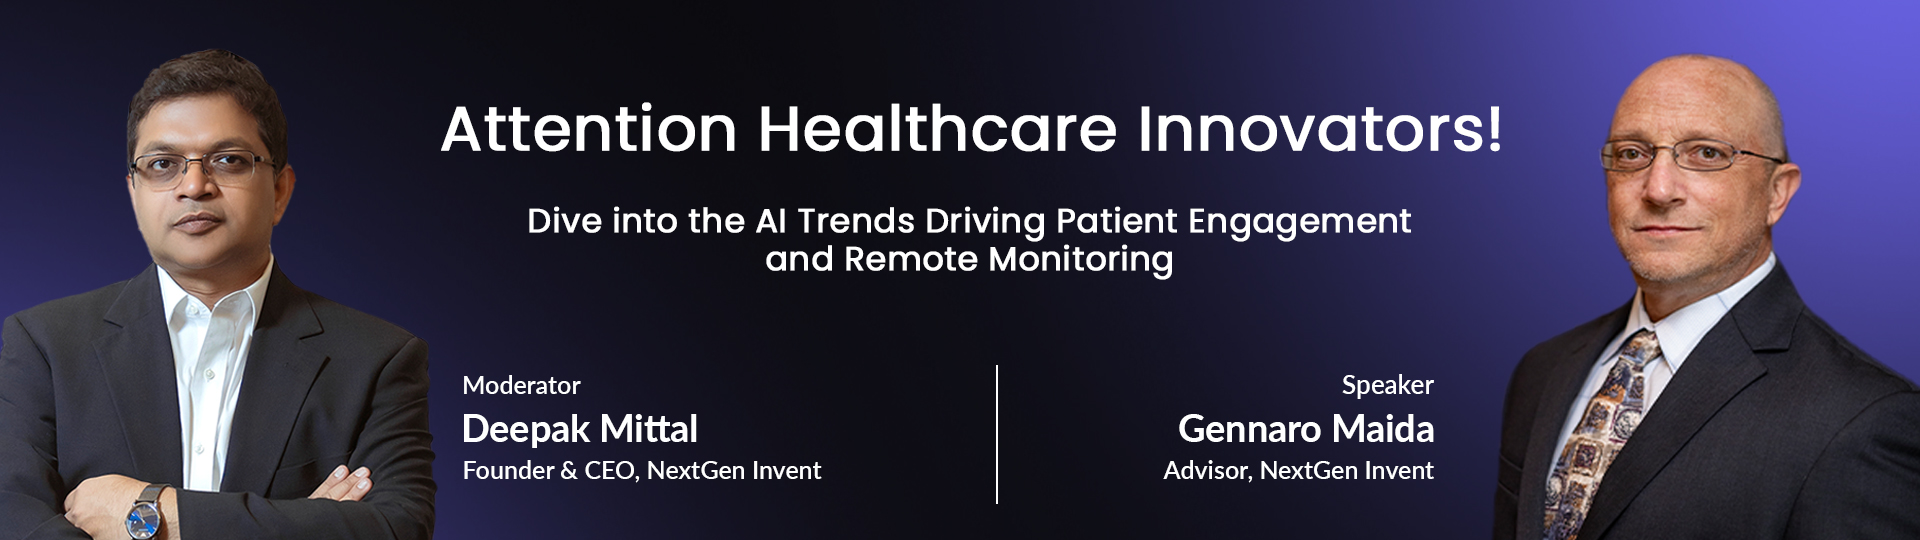 AI Trends in Healthcare Event